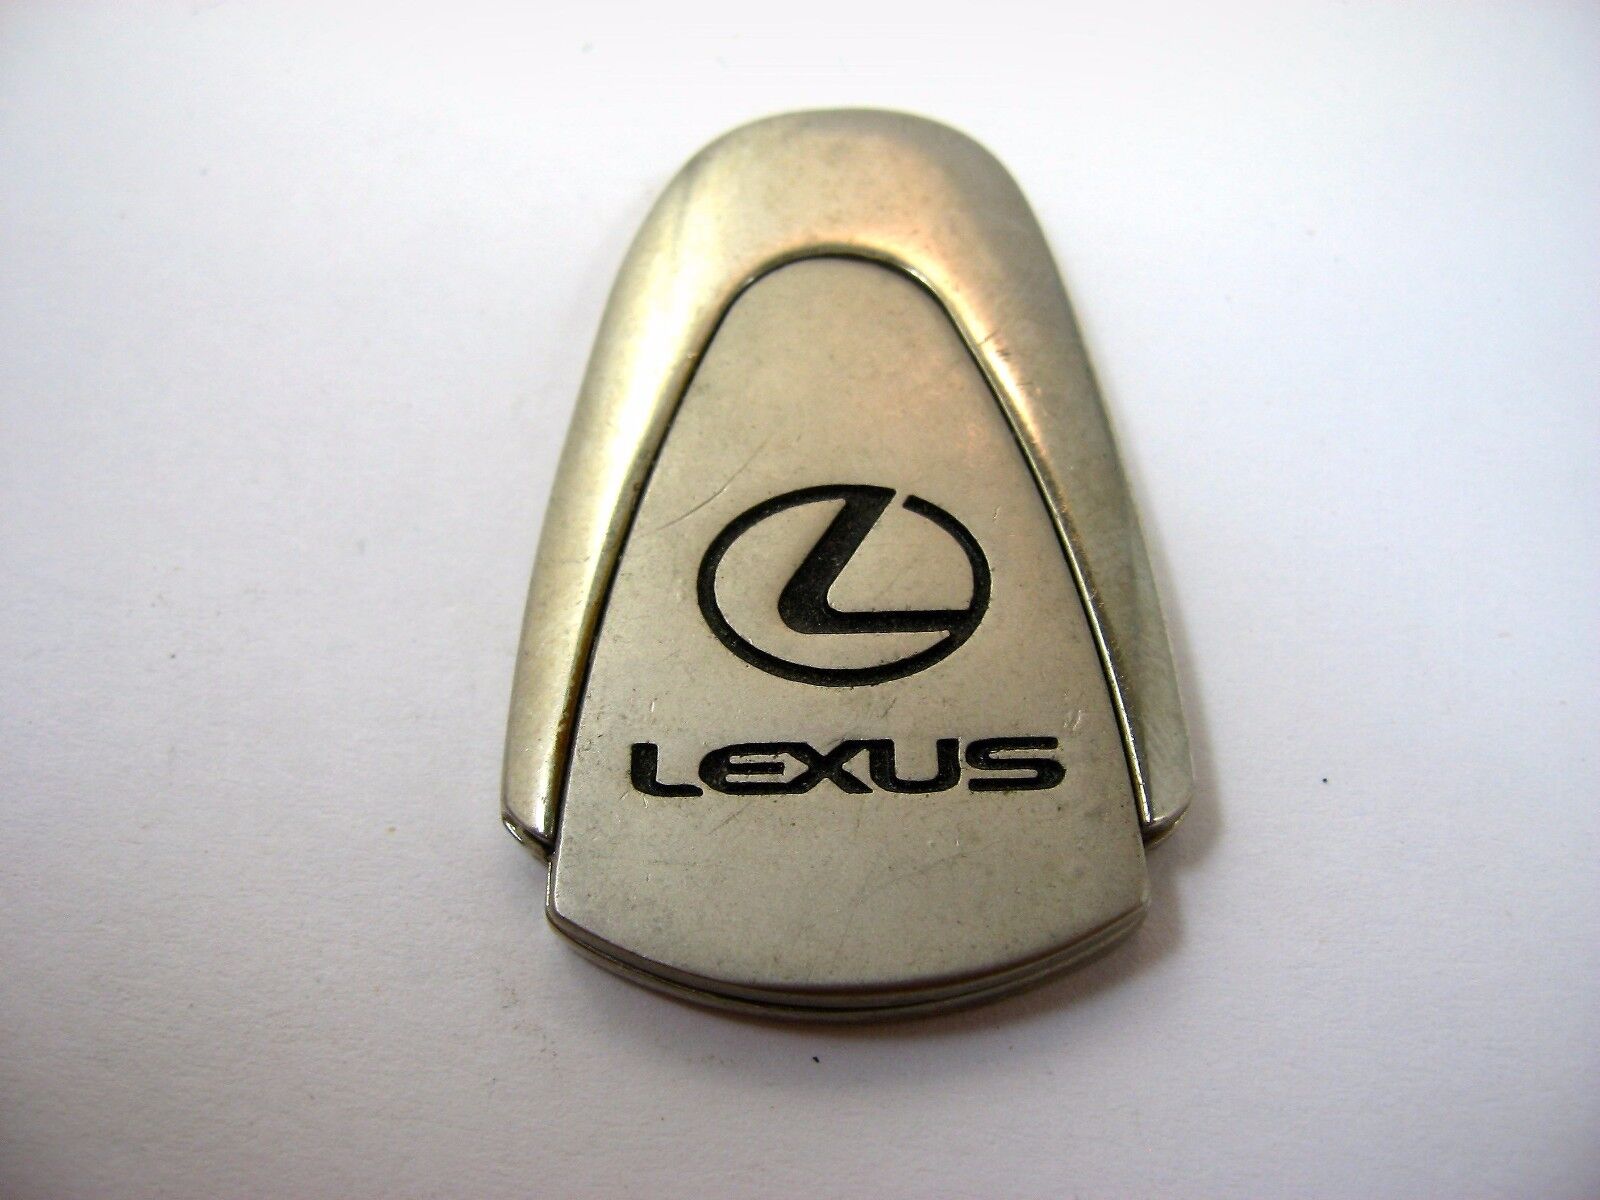 Vintage Collectible Keychain Piece: LEXUS (no ring)